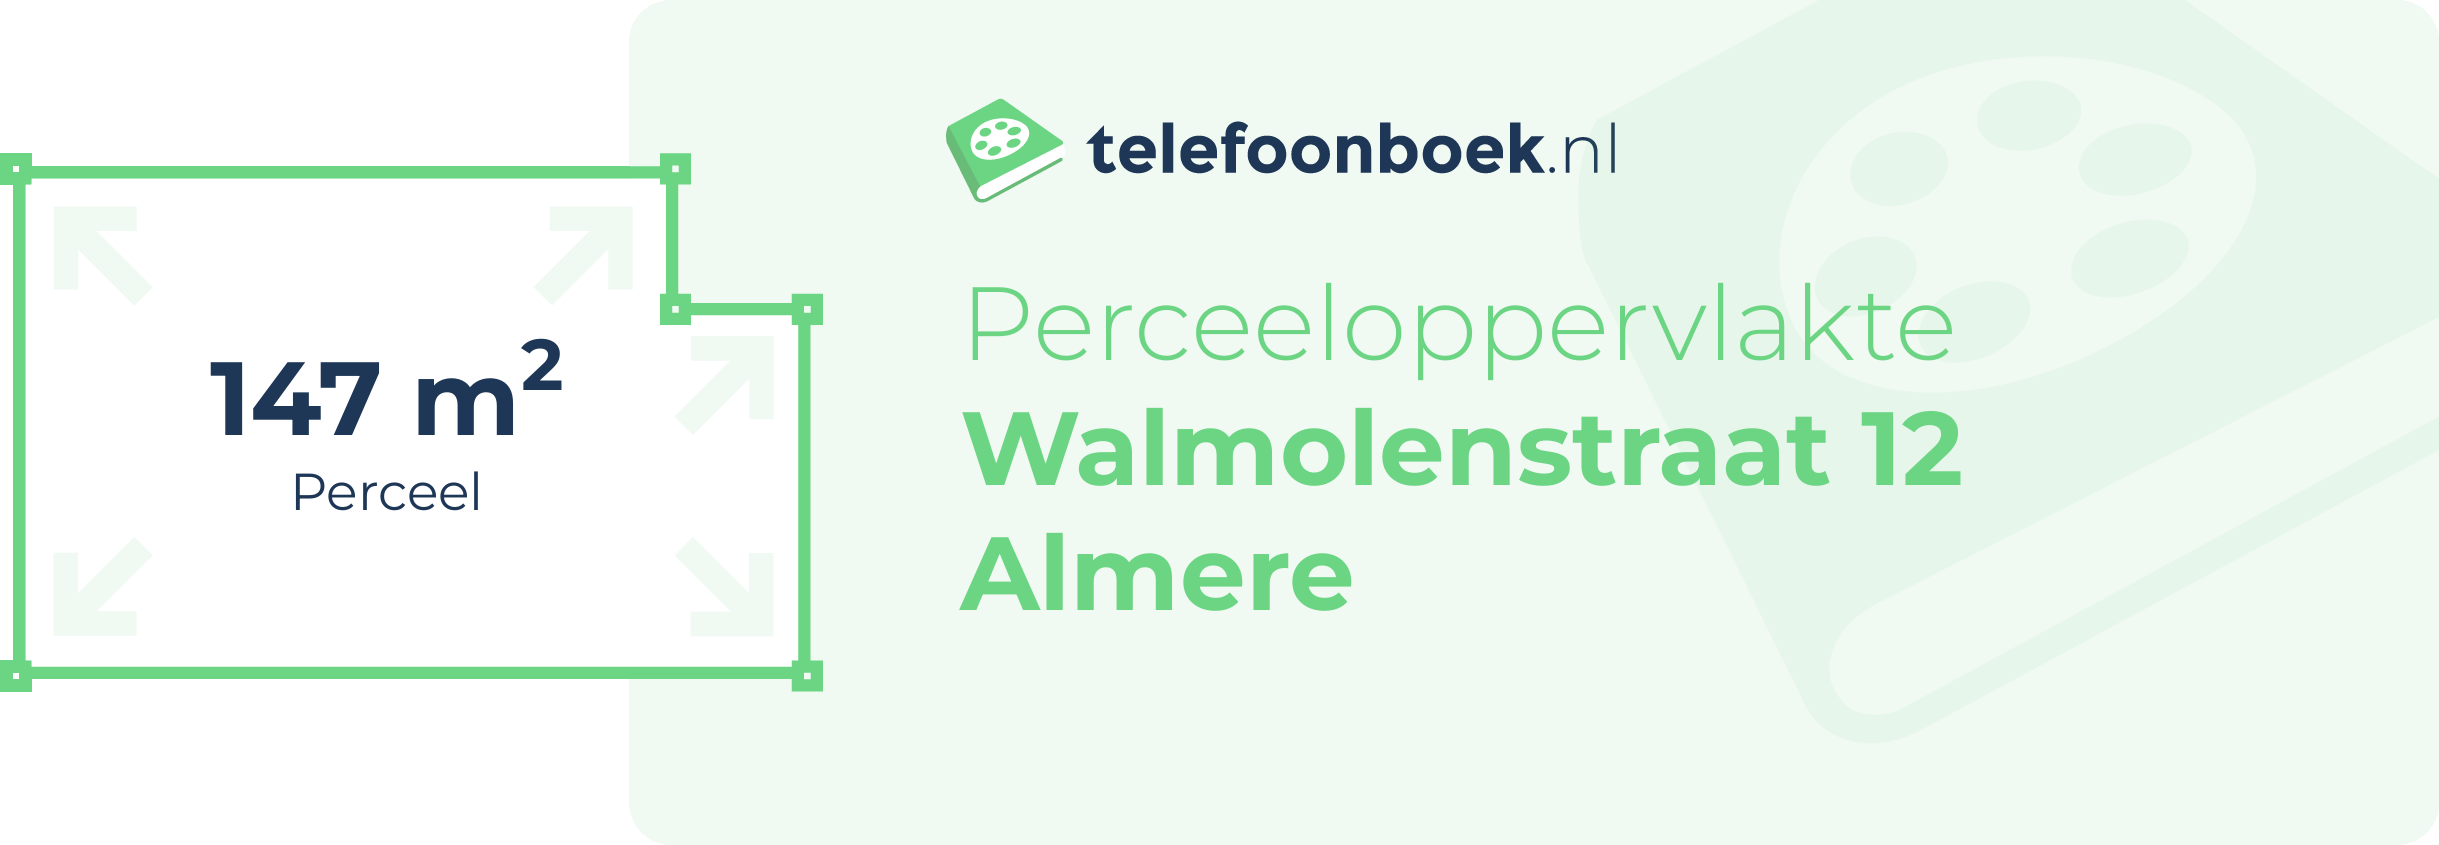 Perceeloppervlakte Walmolenstraat 12 Almere